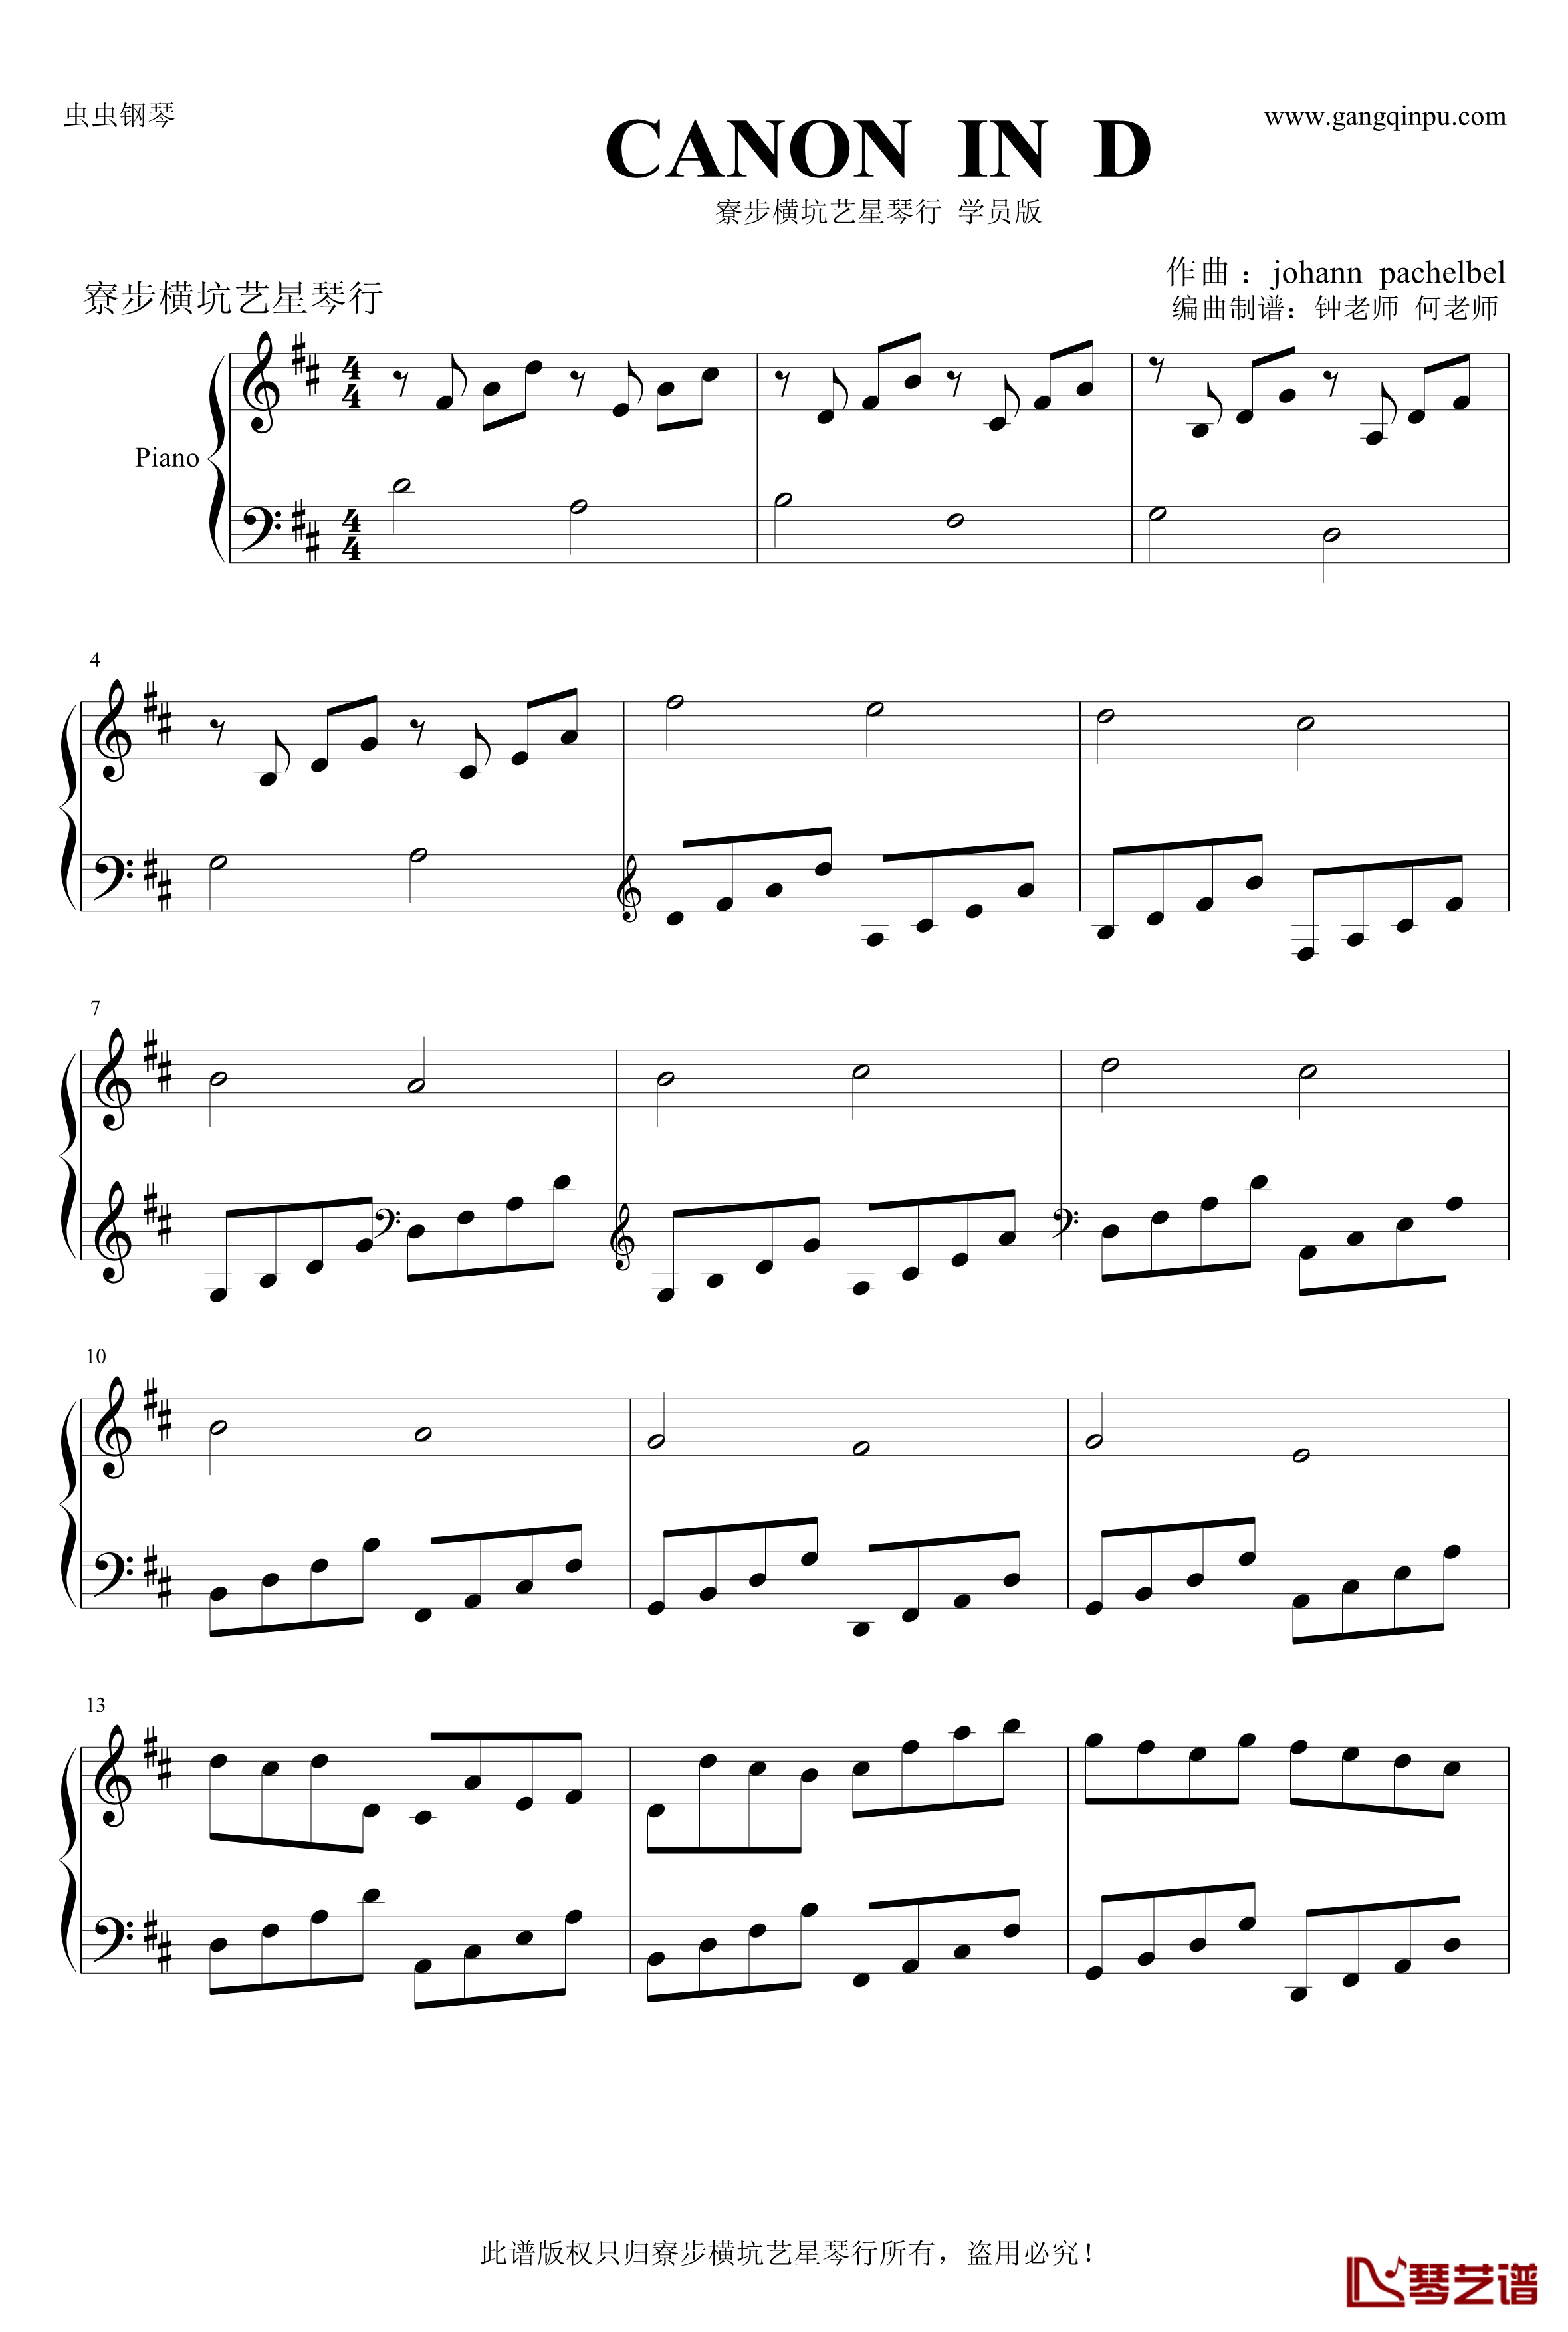 CANON IN D钢琴谱-帕赫贝尔-Pachelbel1